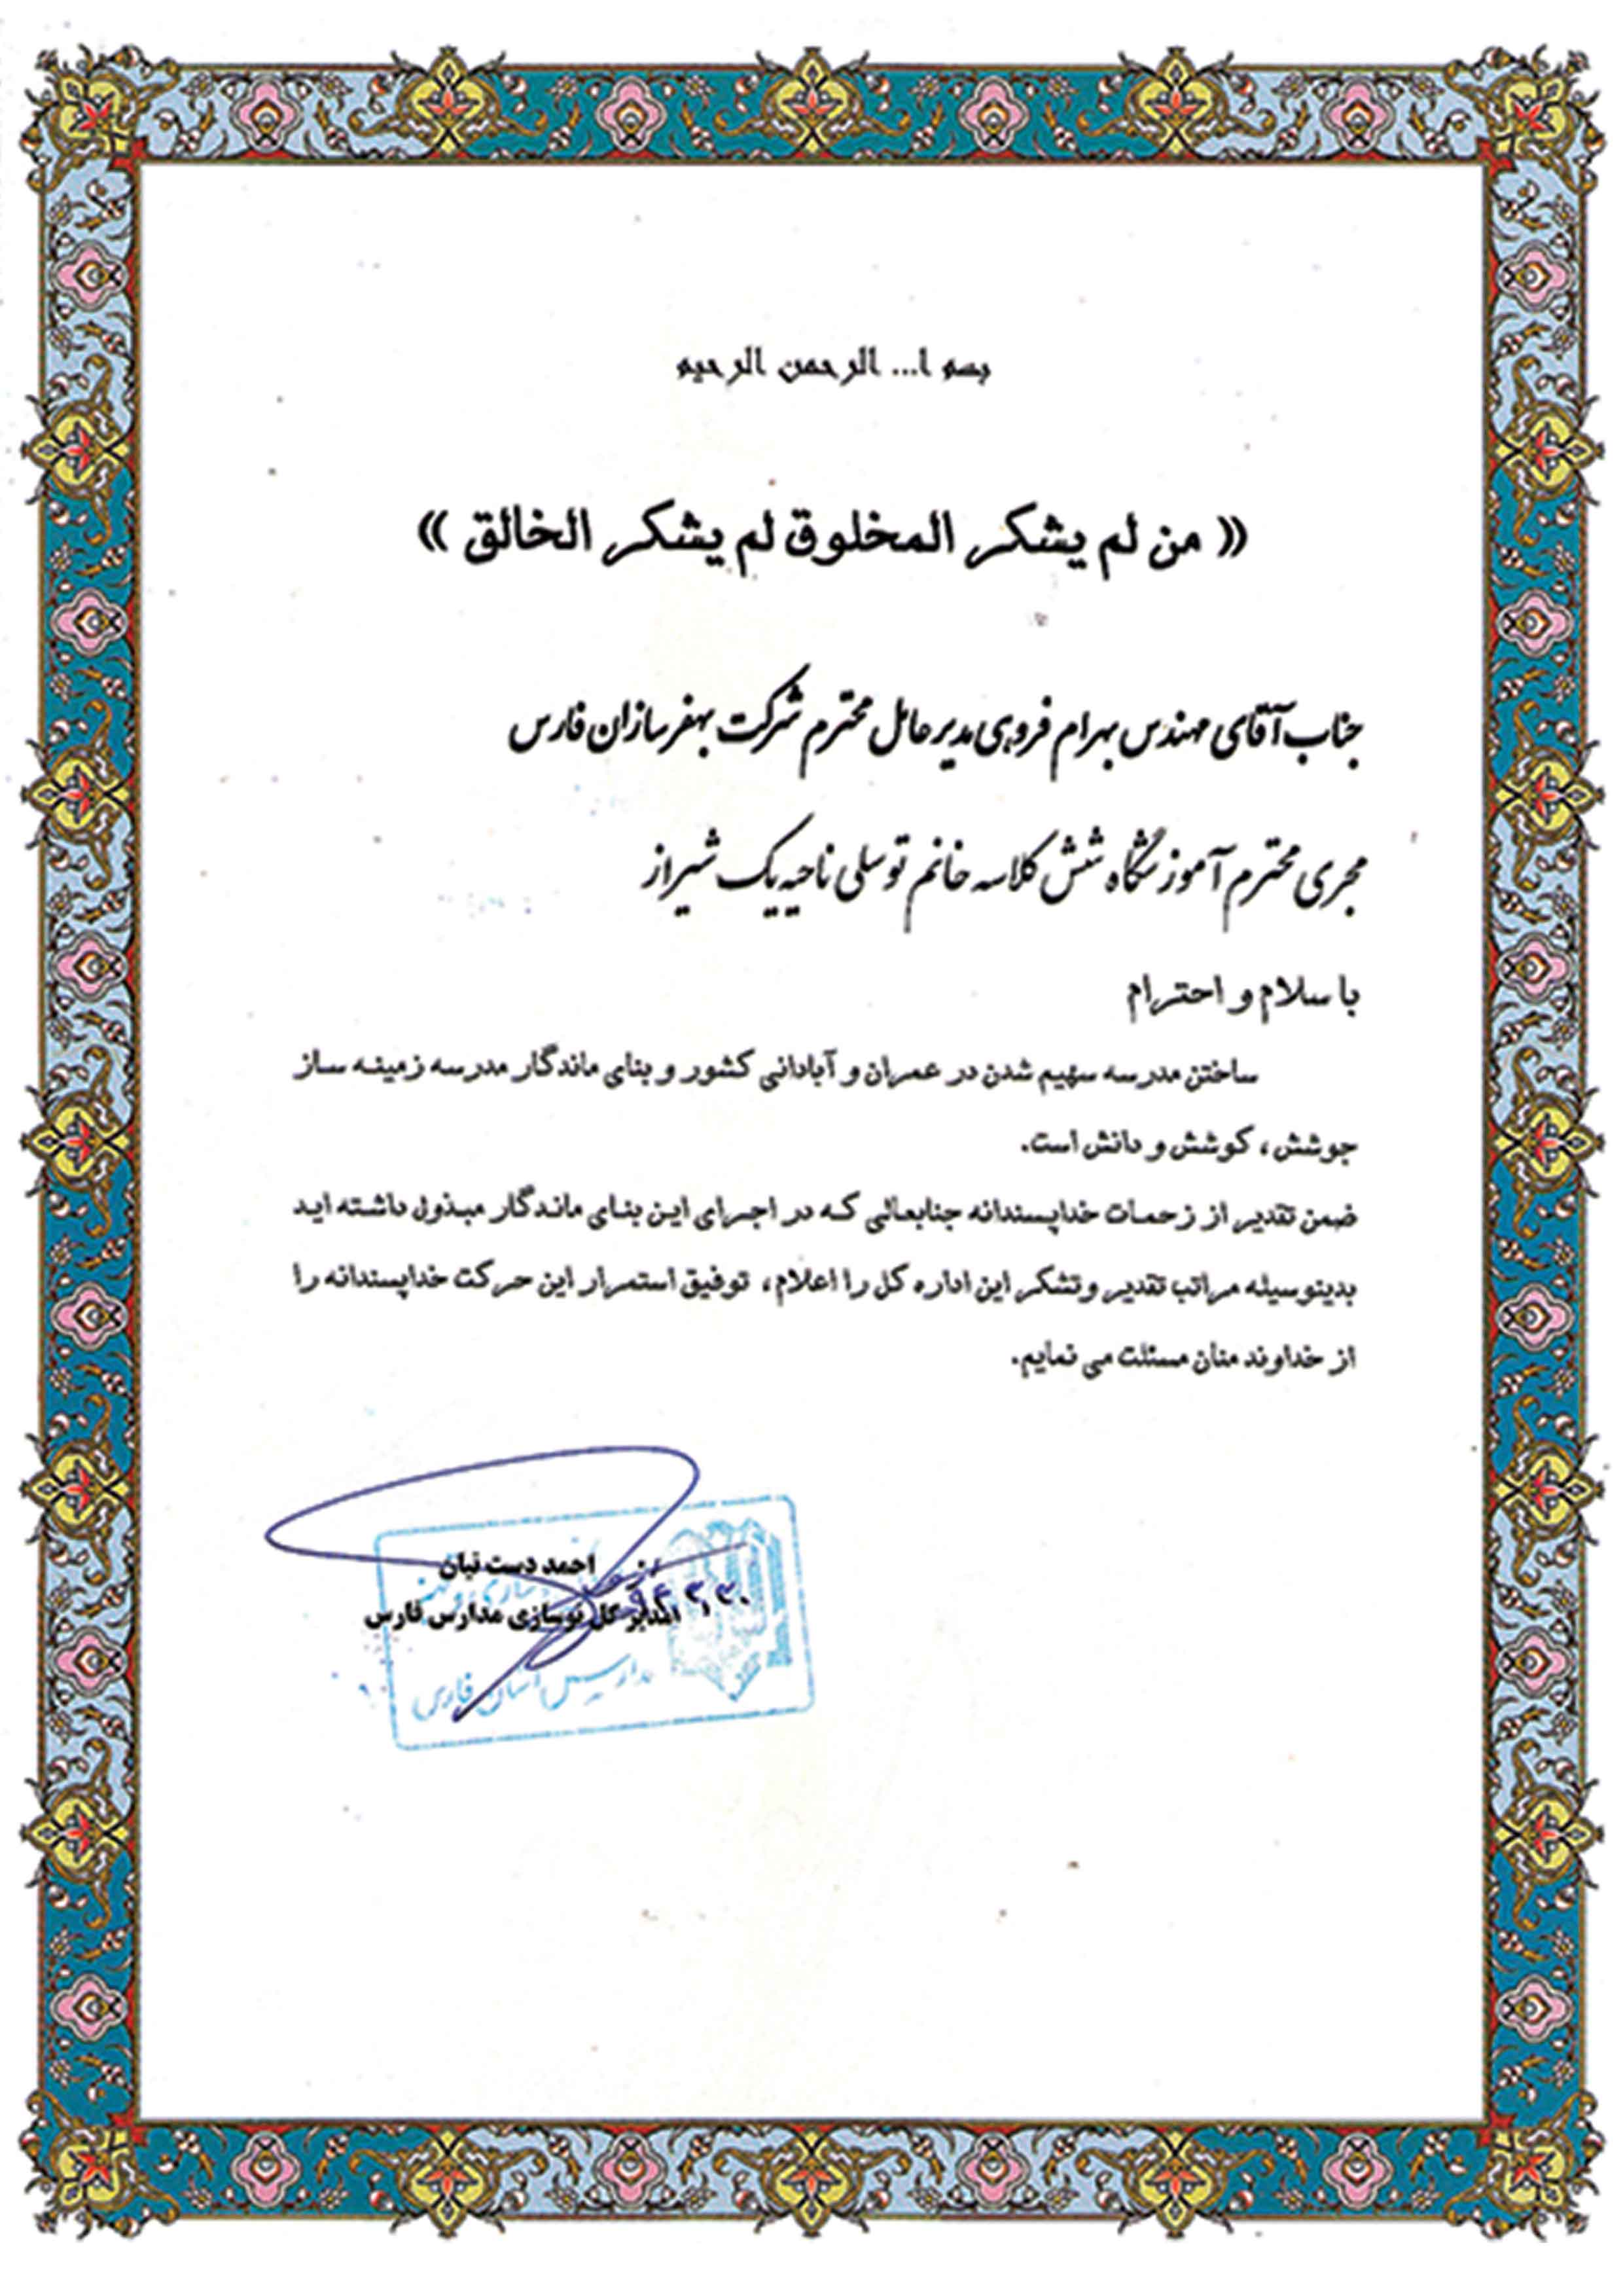 Acknowledgement from school’s renewal general director Fateme Tavasoli school